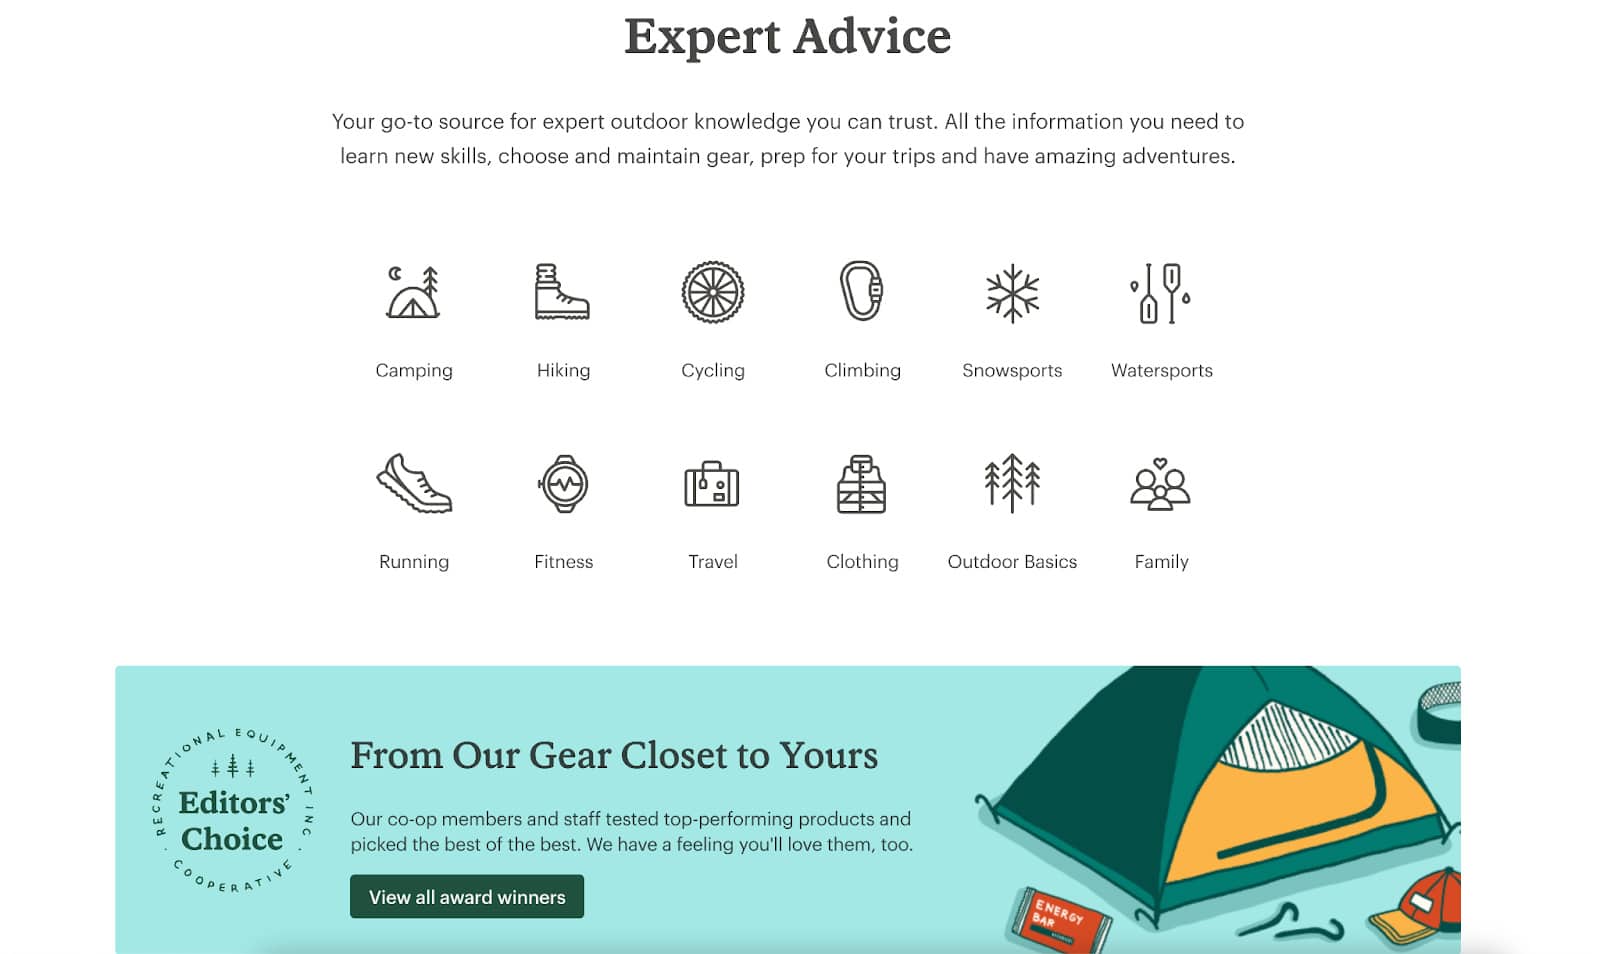 Expert Advice Expert Advice page.